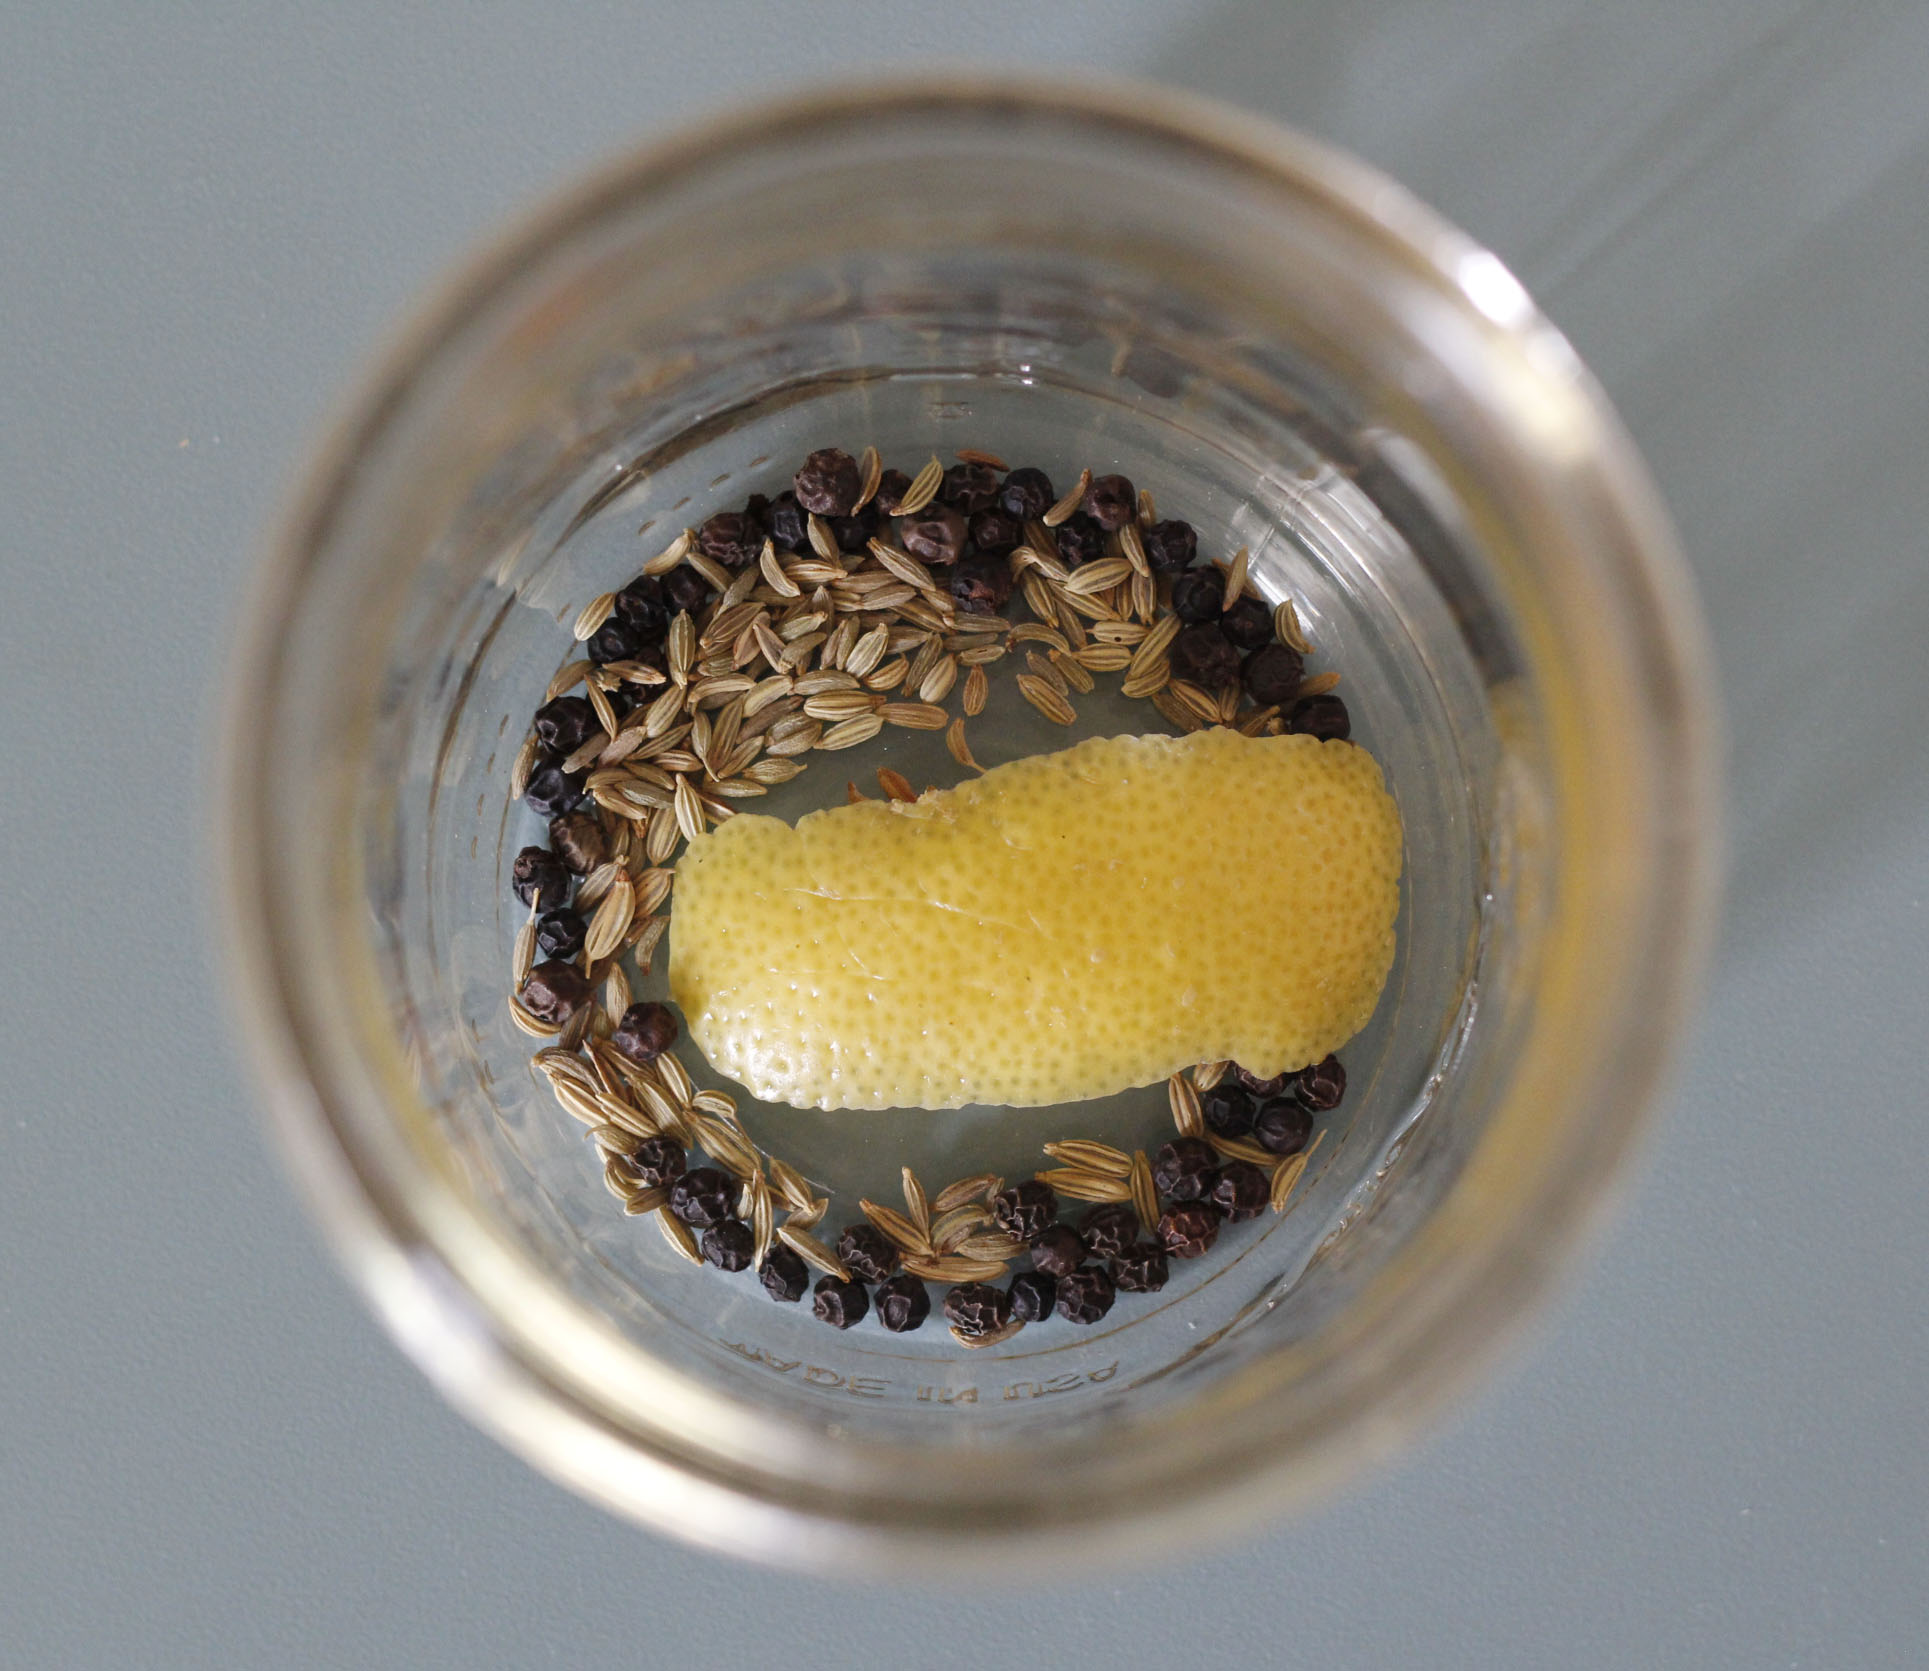 Fennel seeds, peppercorns, and lemon peels in a Mason Jar for pickling Kohlrabi.